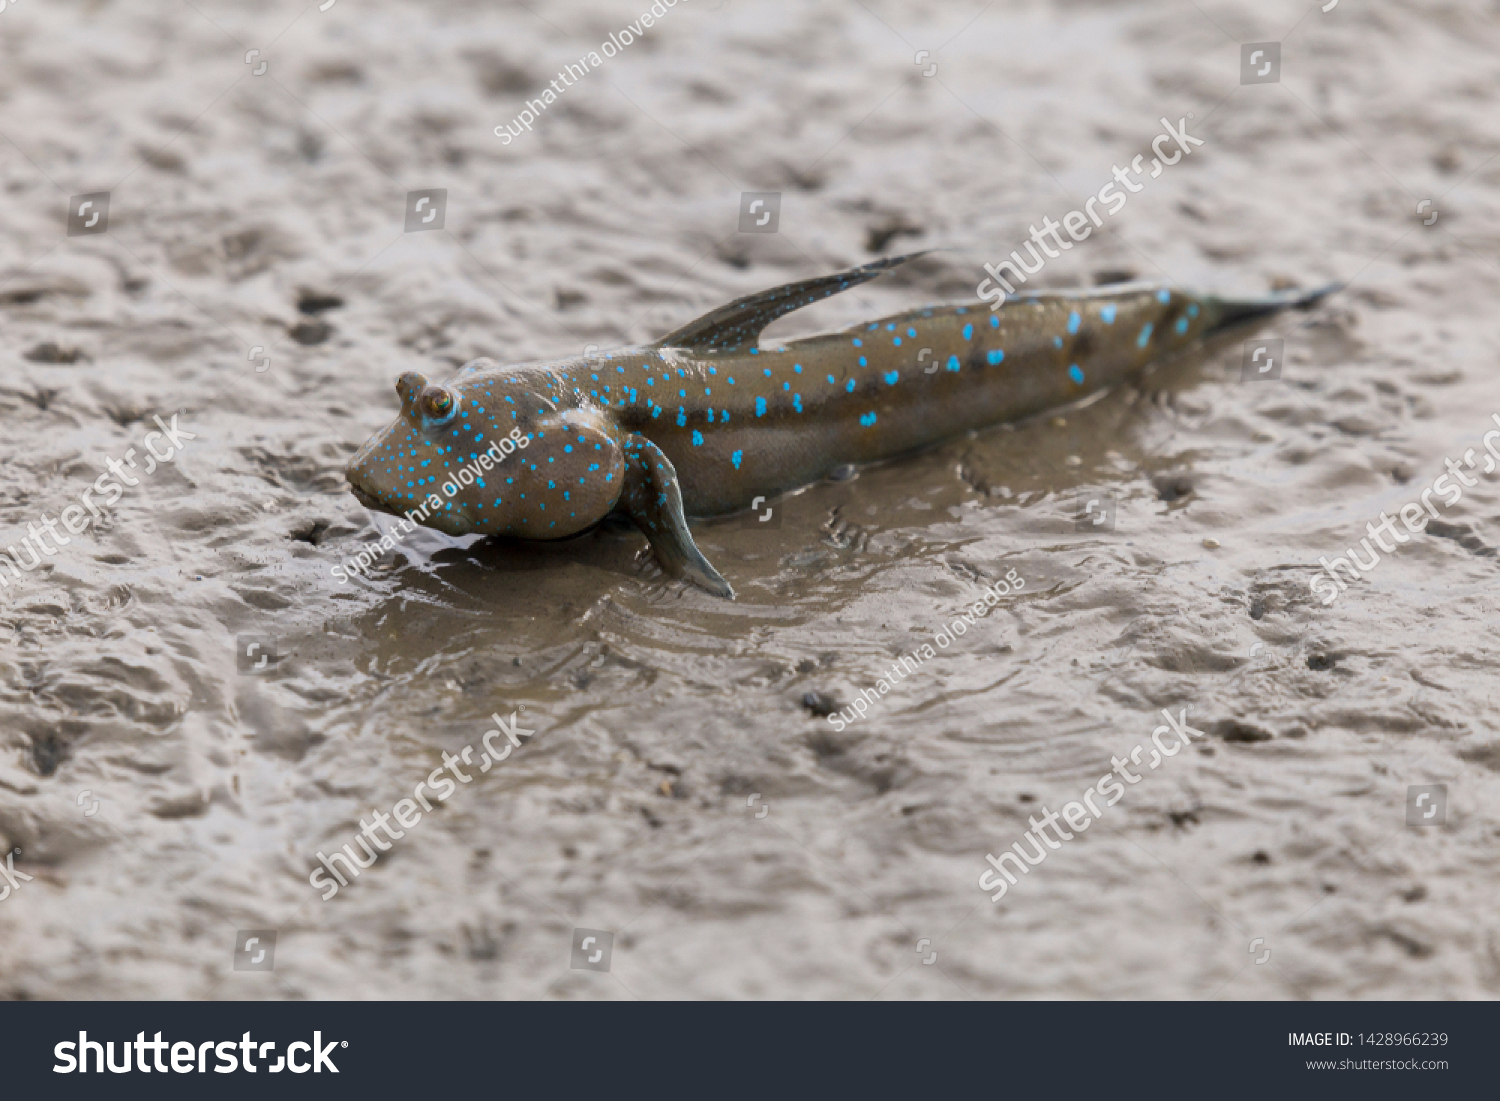 Mudskipper or Amphibious fish in the mud at mangrove forest in Satun, Thailand #1428966239